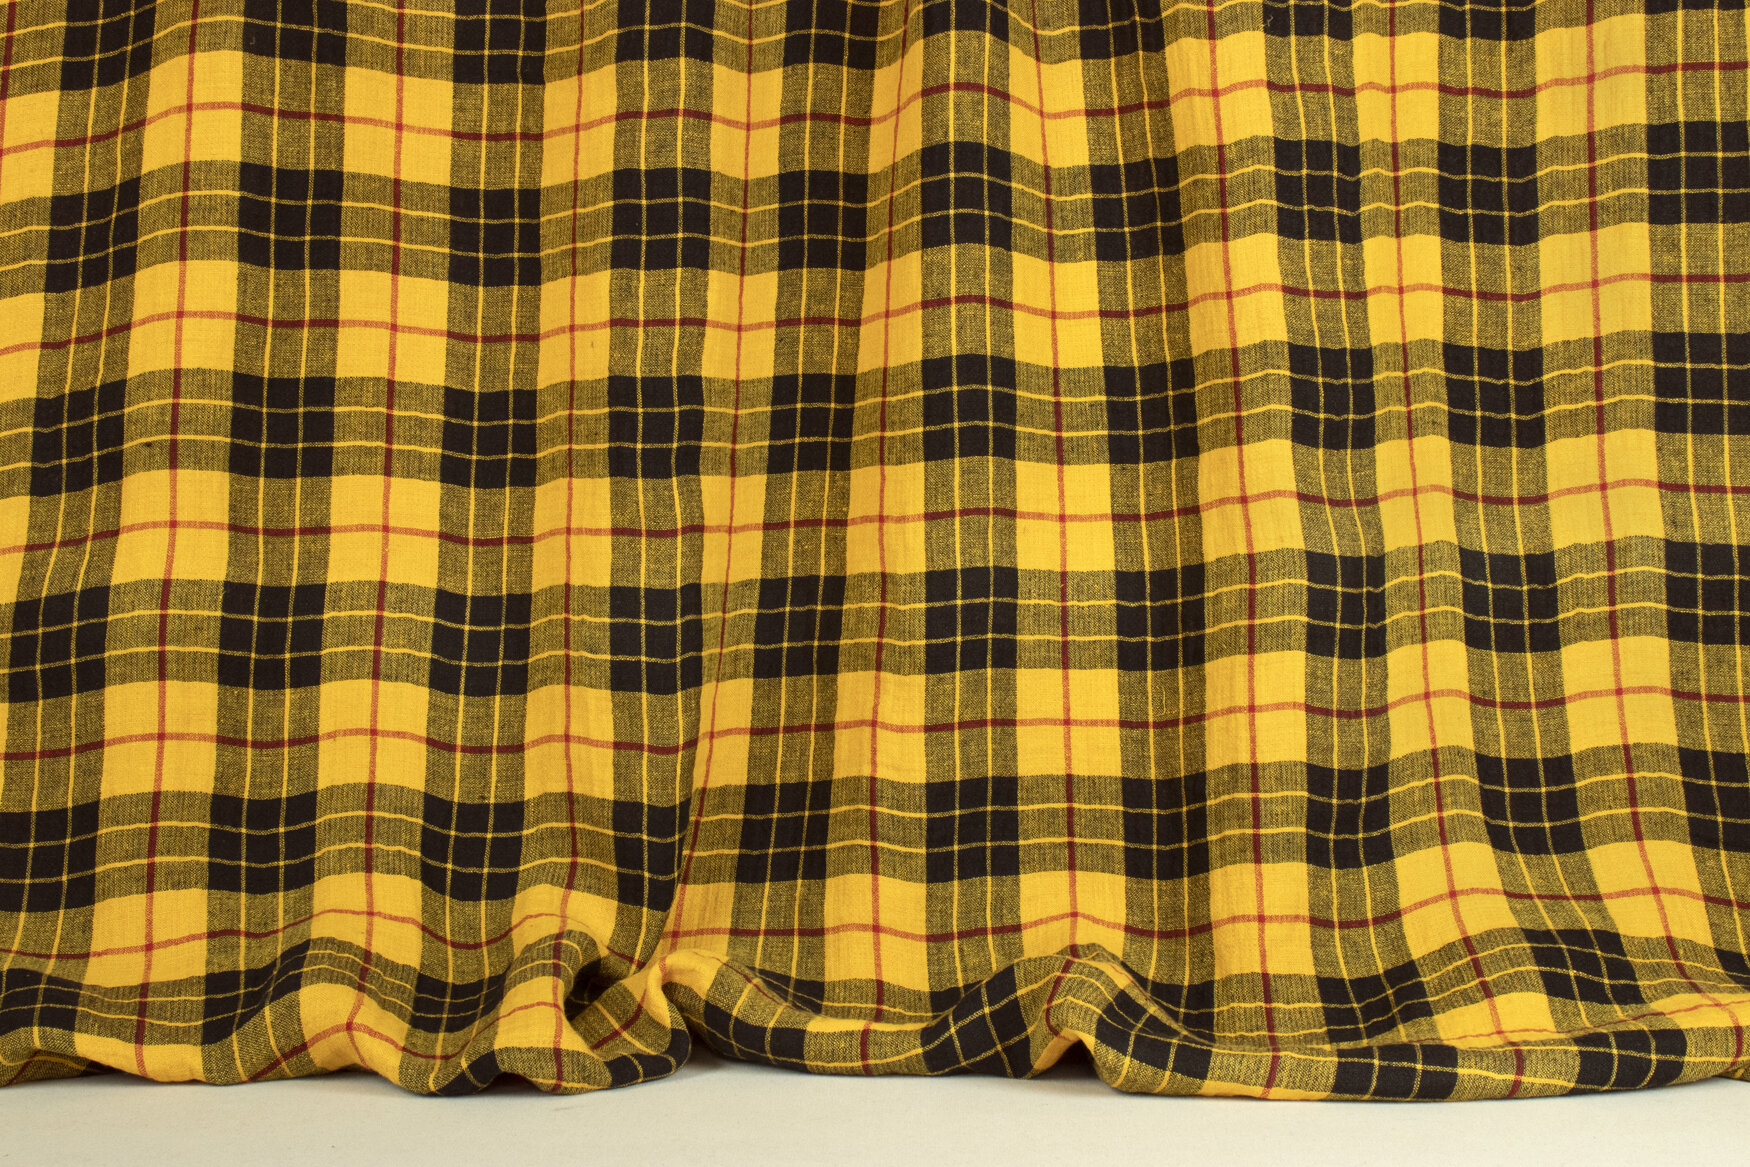 Yellow Tartan Plaid Irish Linen - Inverness - 11 Yard Piece — Dallas A.  Saunders Artisan Textiles & More